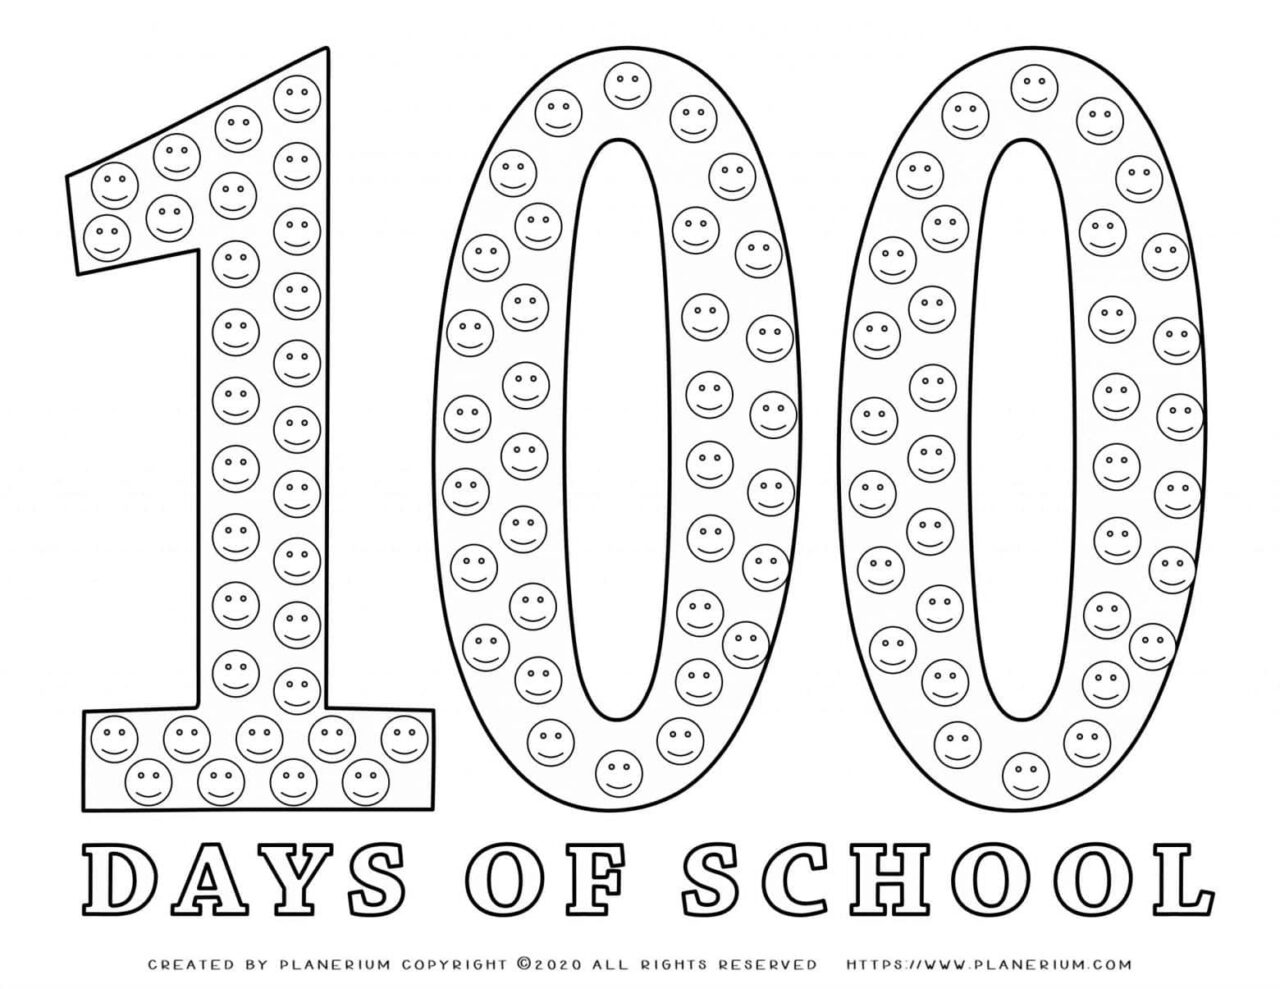 100 Days of School - Coloring Page - 100 Smileys | Planerium